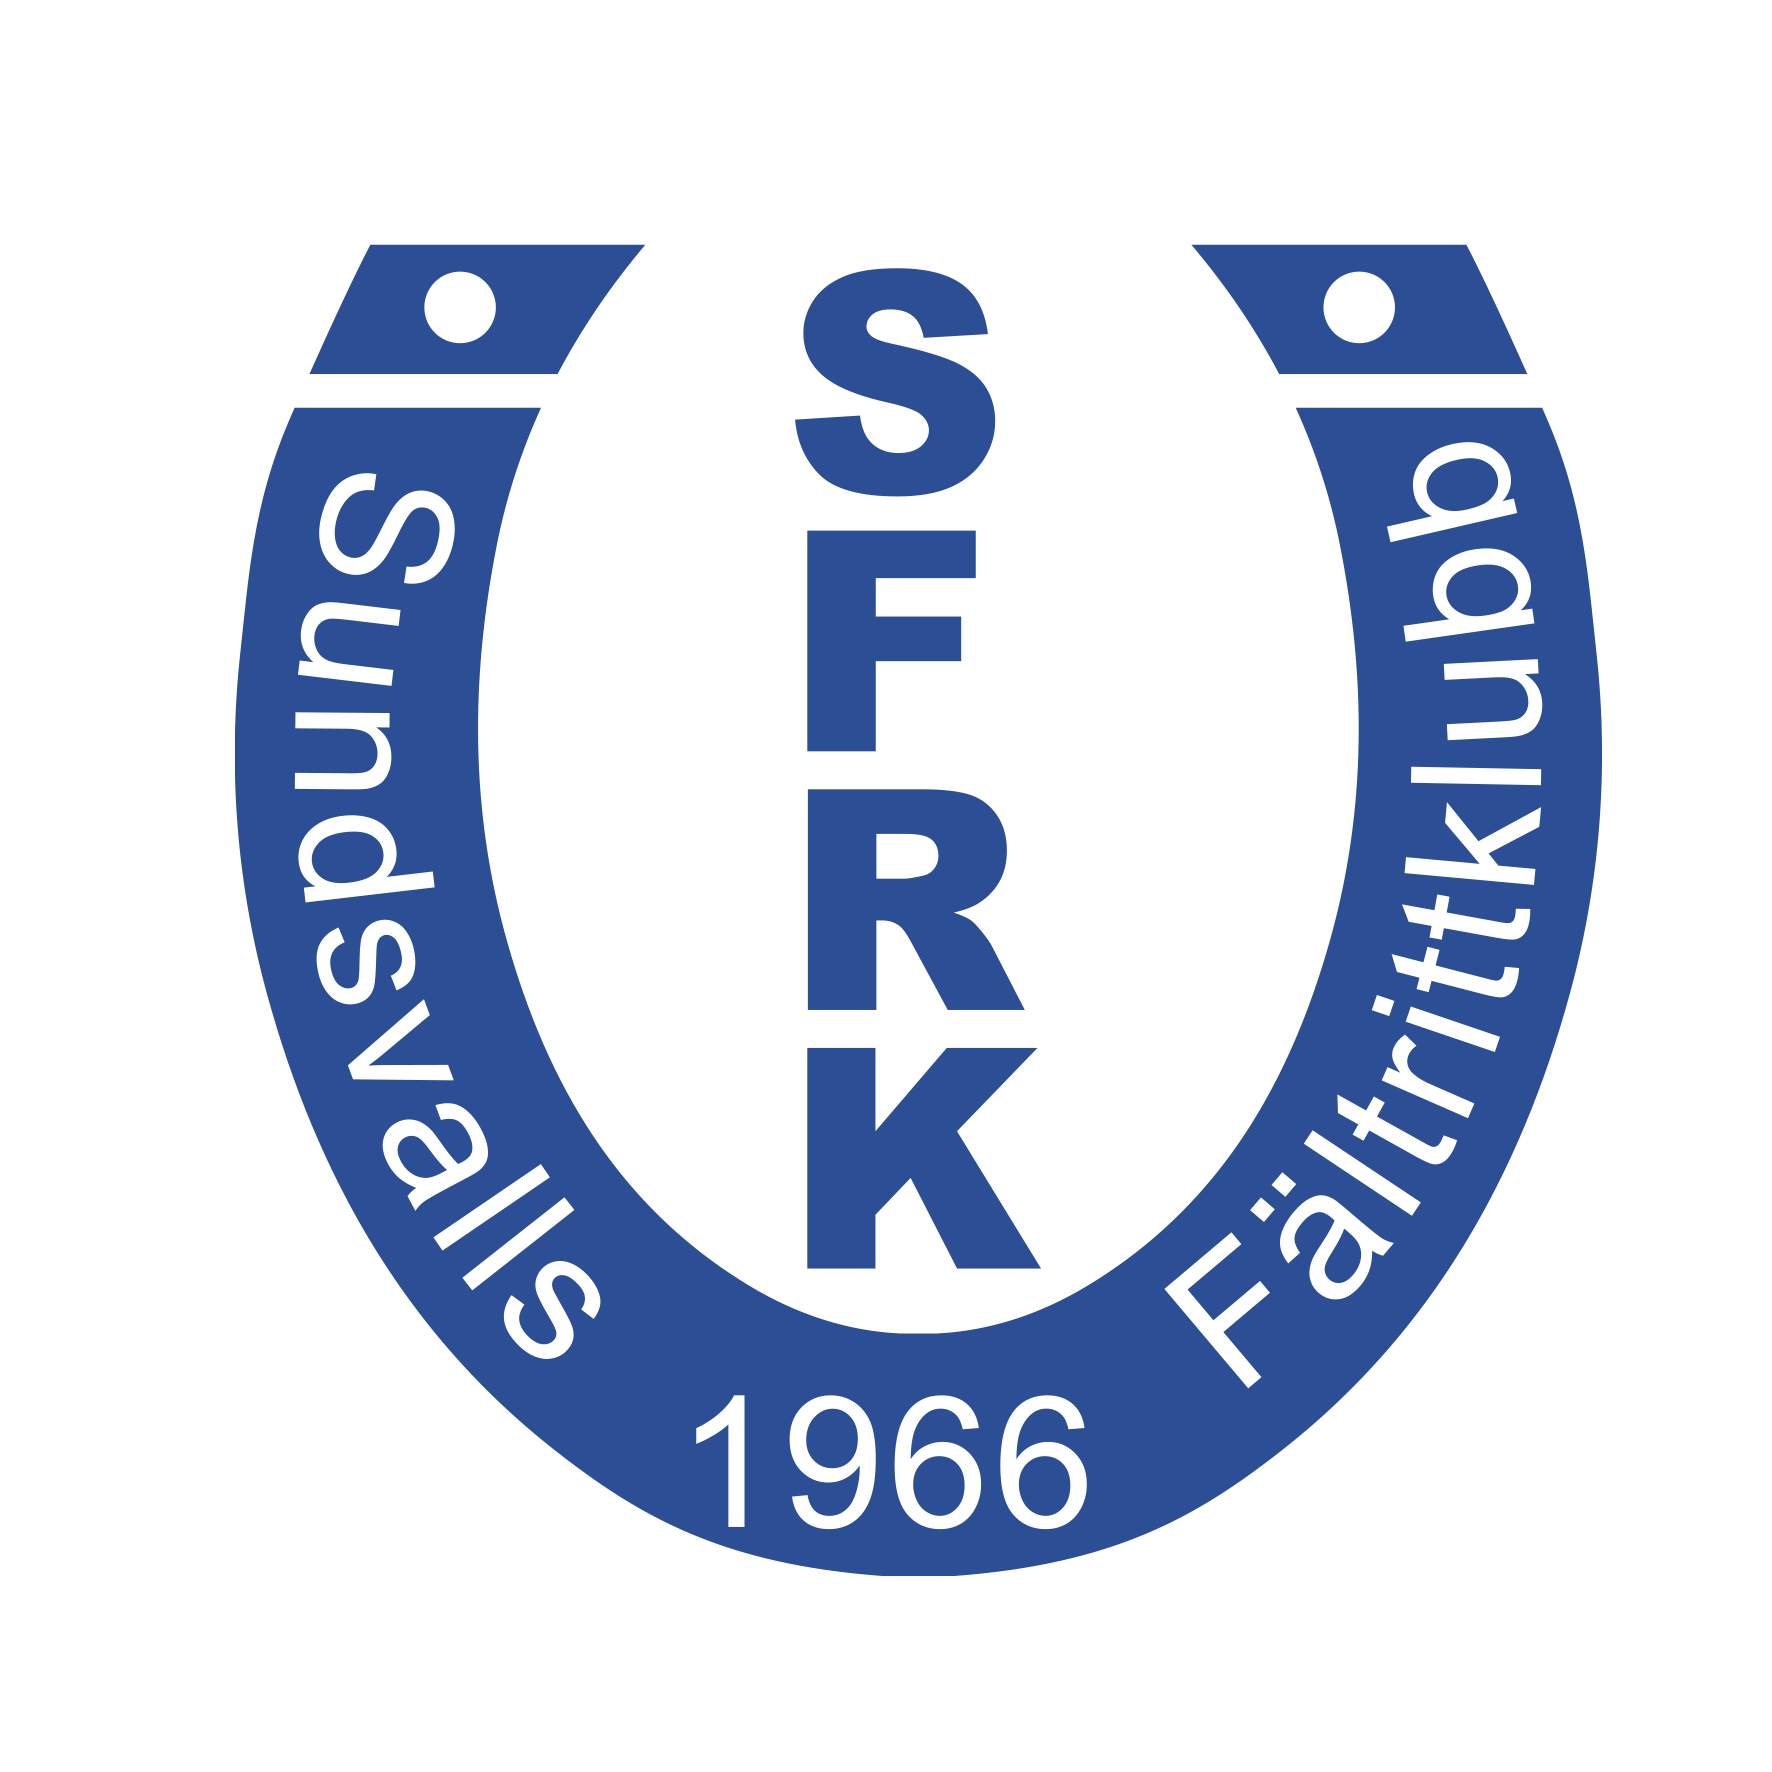 SFRK logo